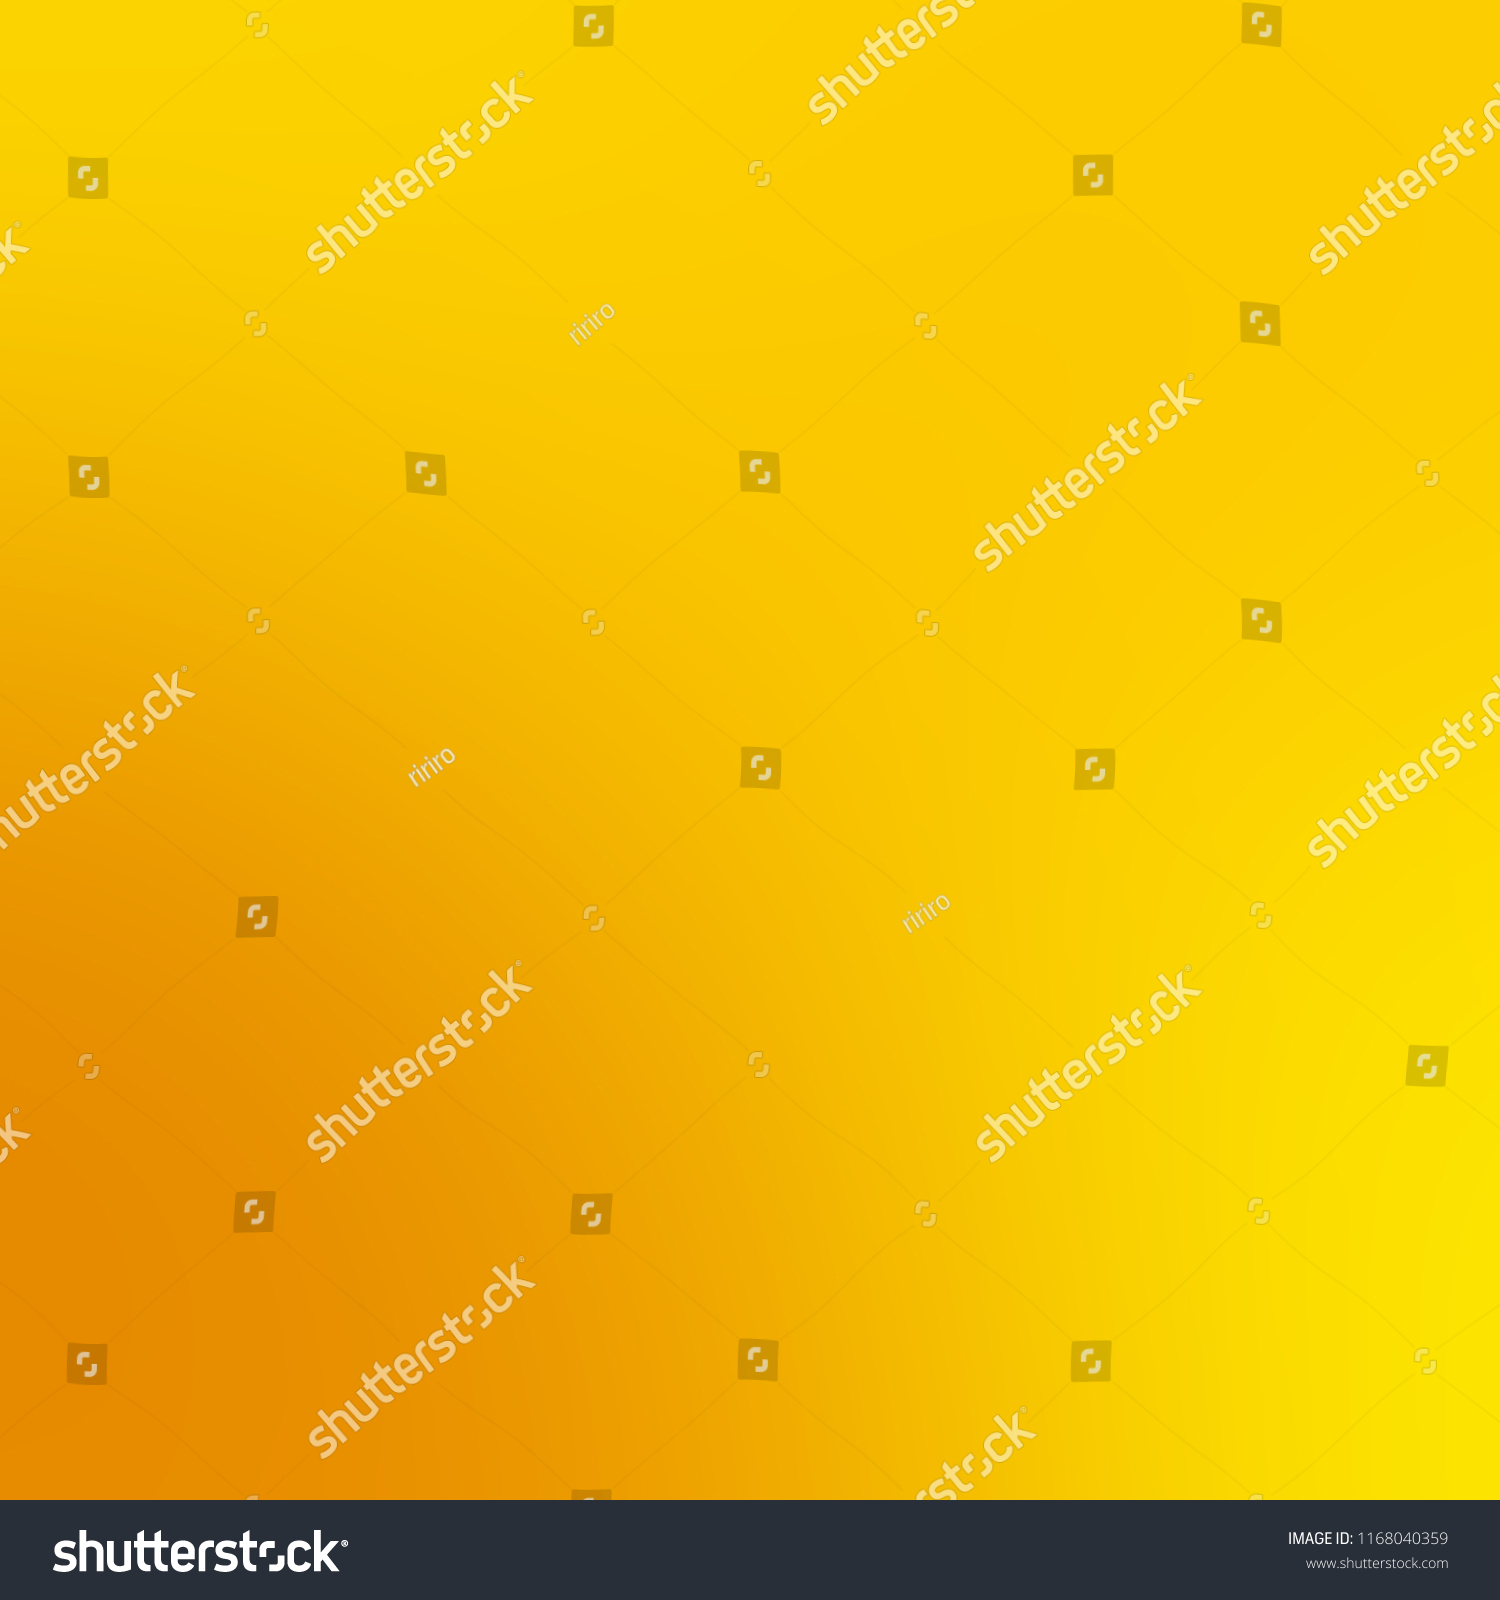 Yellow blur art backdrop website background #1168040359